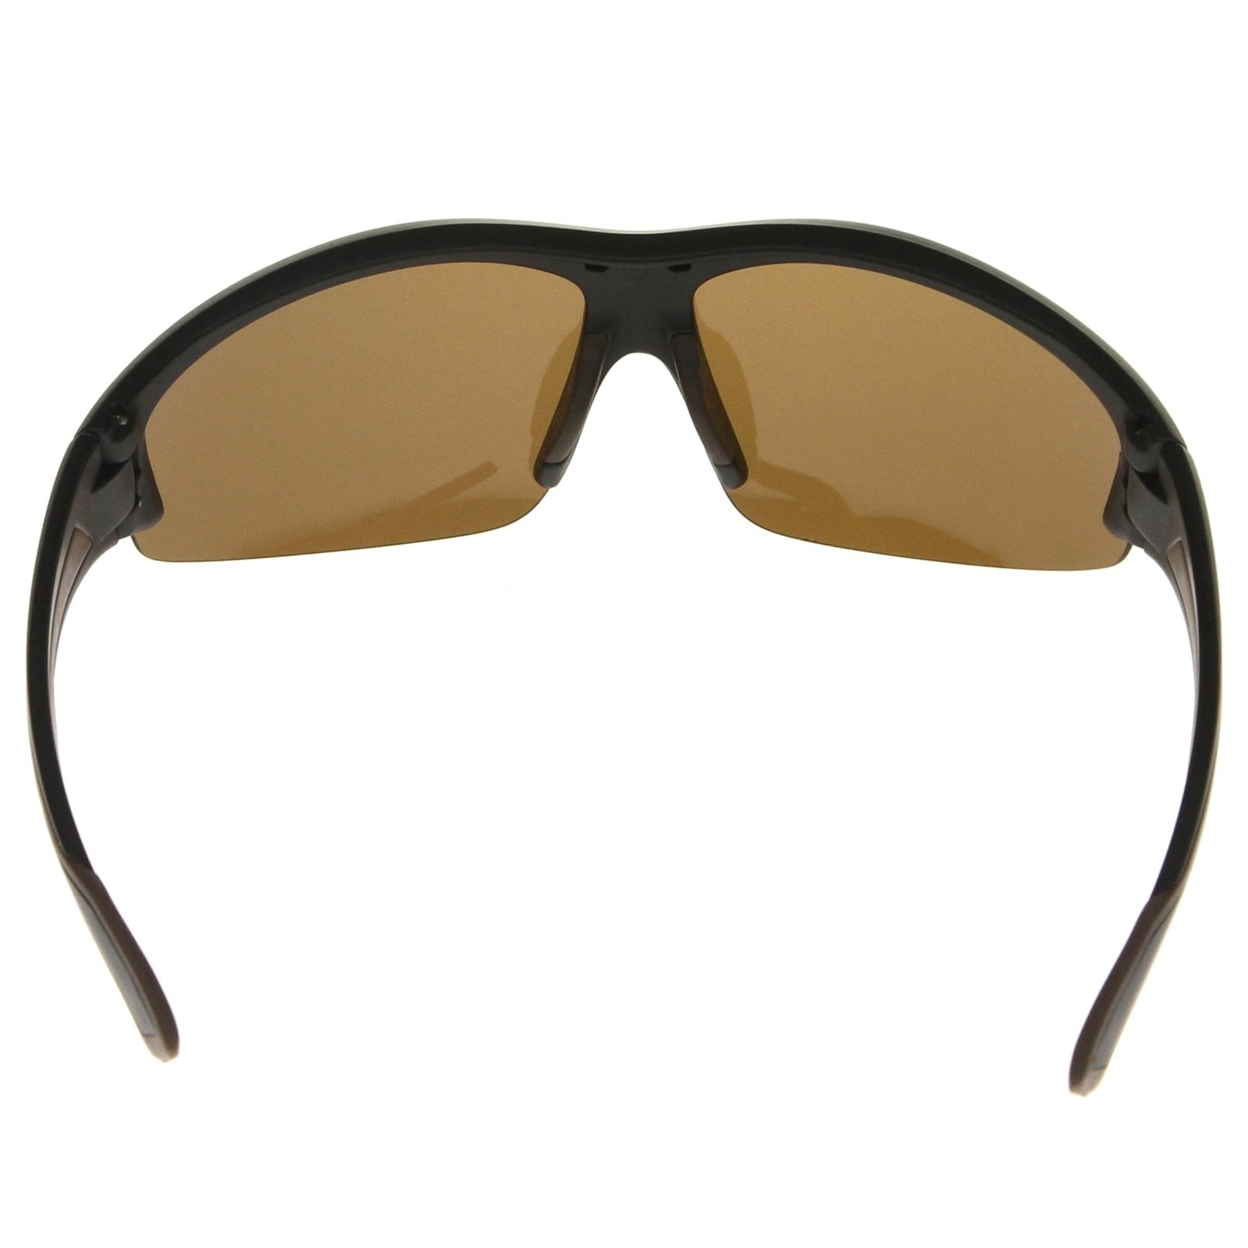 Rannier - Polarized Shatterproof Shield Lens TR-90 Semi-Rimless Sports Sunglasses 68mm - Shiny Black / Smoke